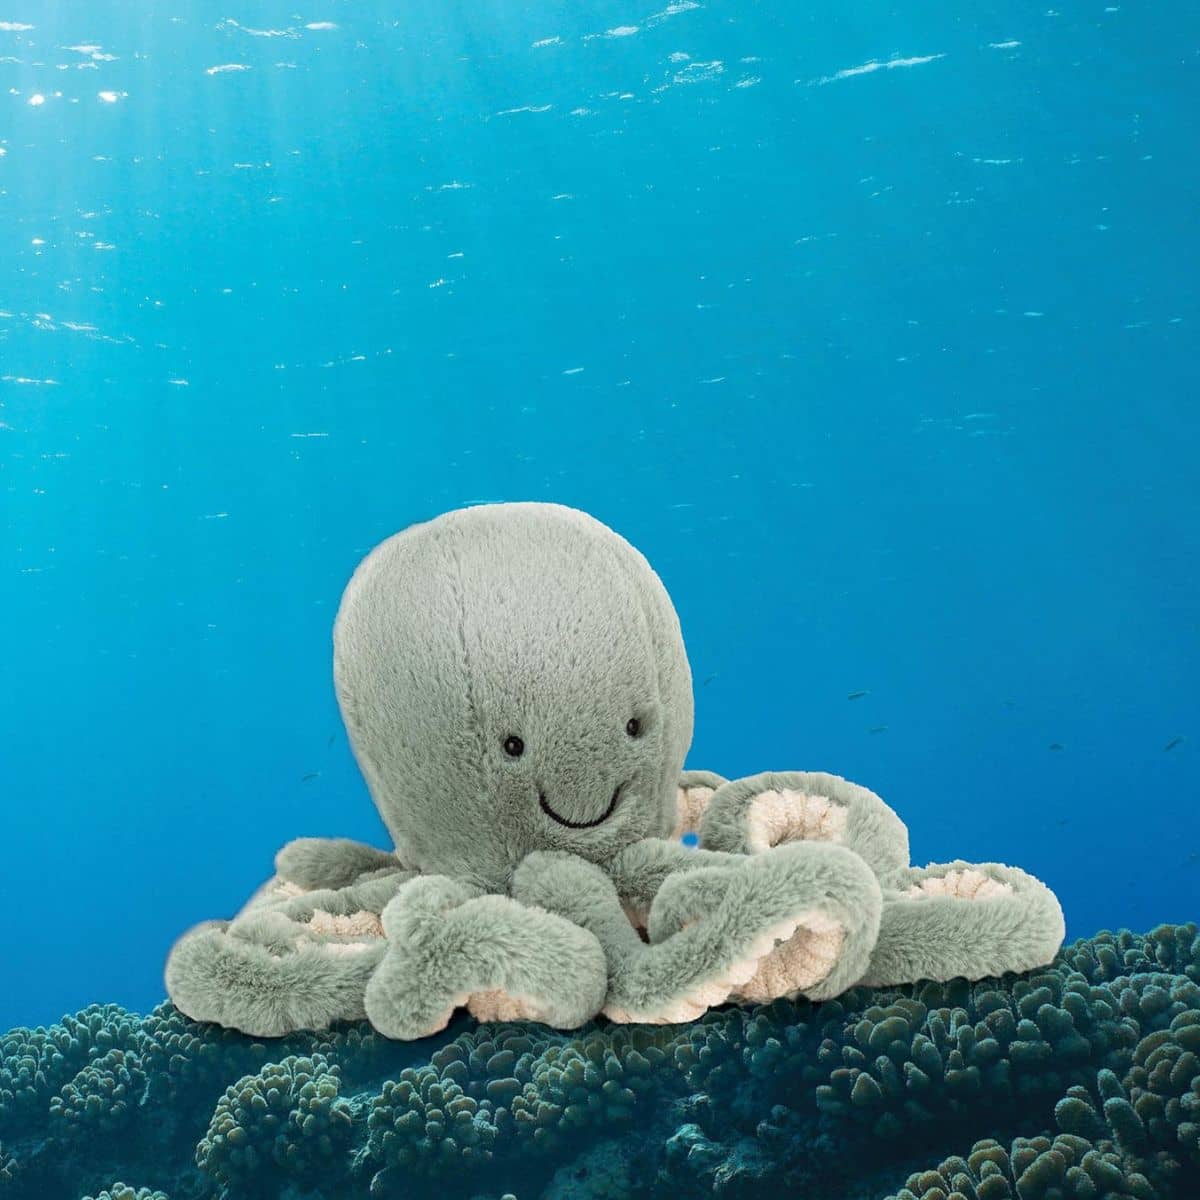 Jellycat Odyssey Octopus Small